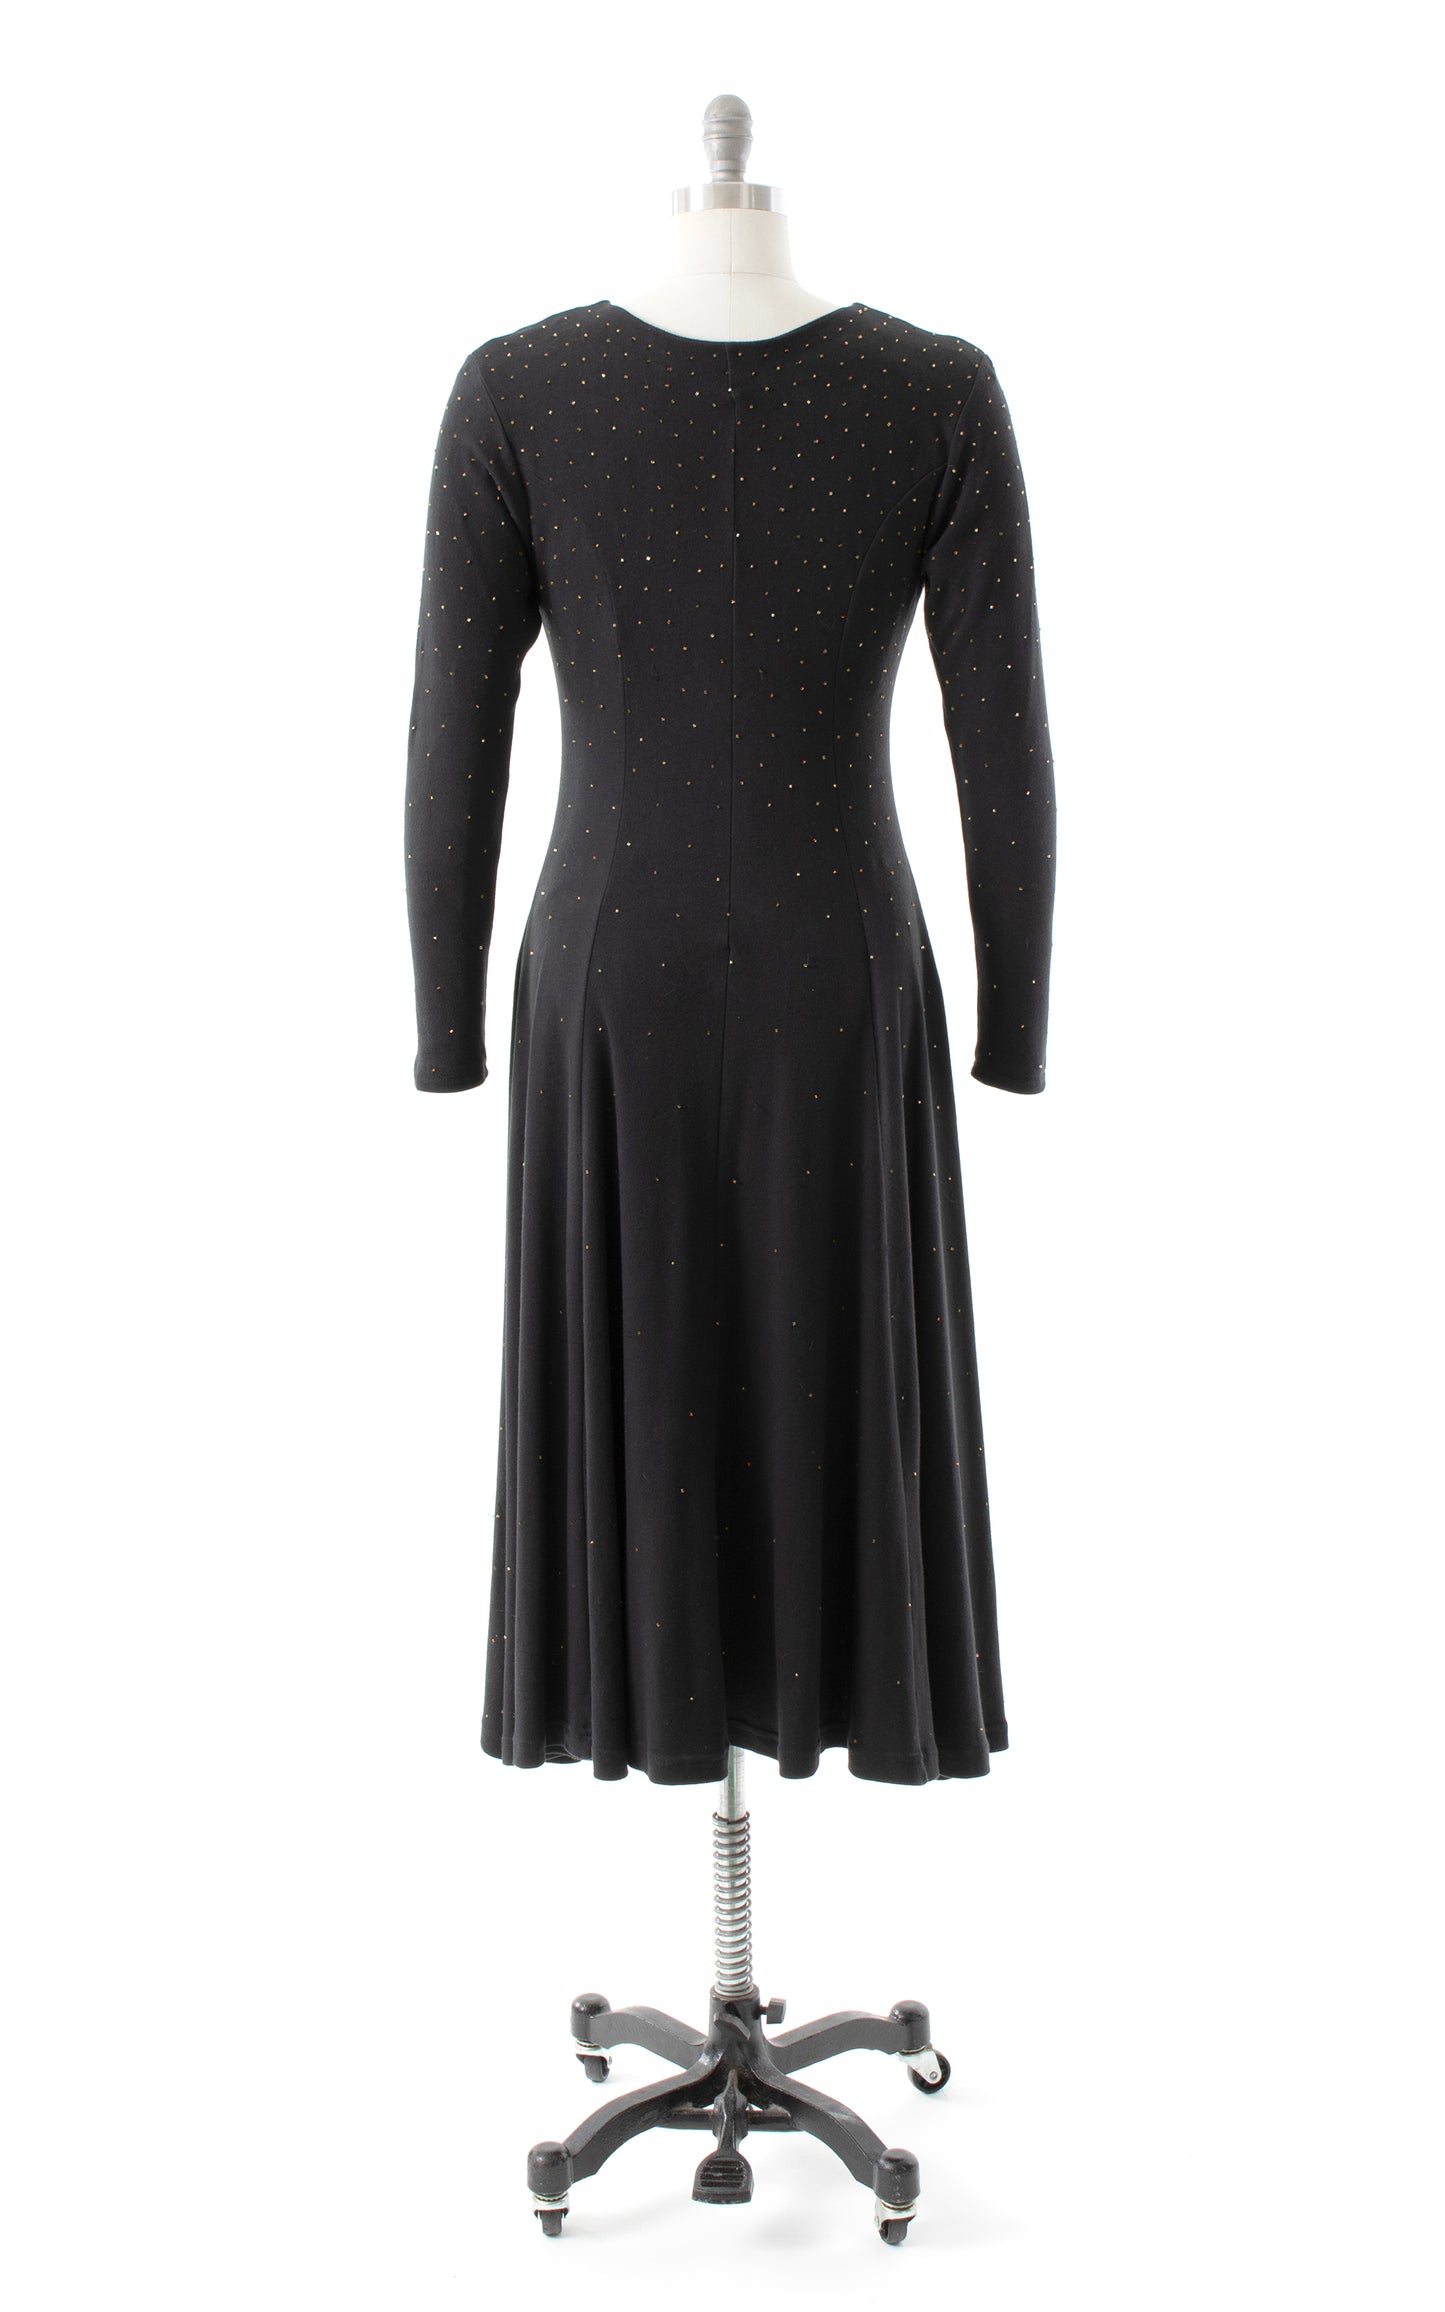 NEW ARRIVAL || 1980s Beaded Black Jersey Dress | medium/large